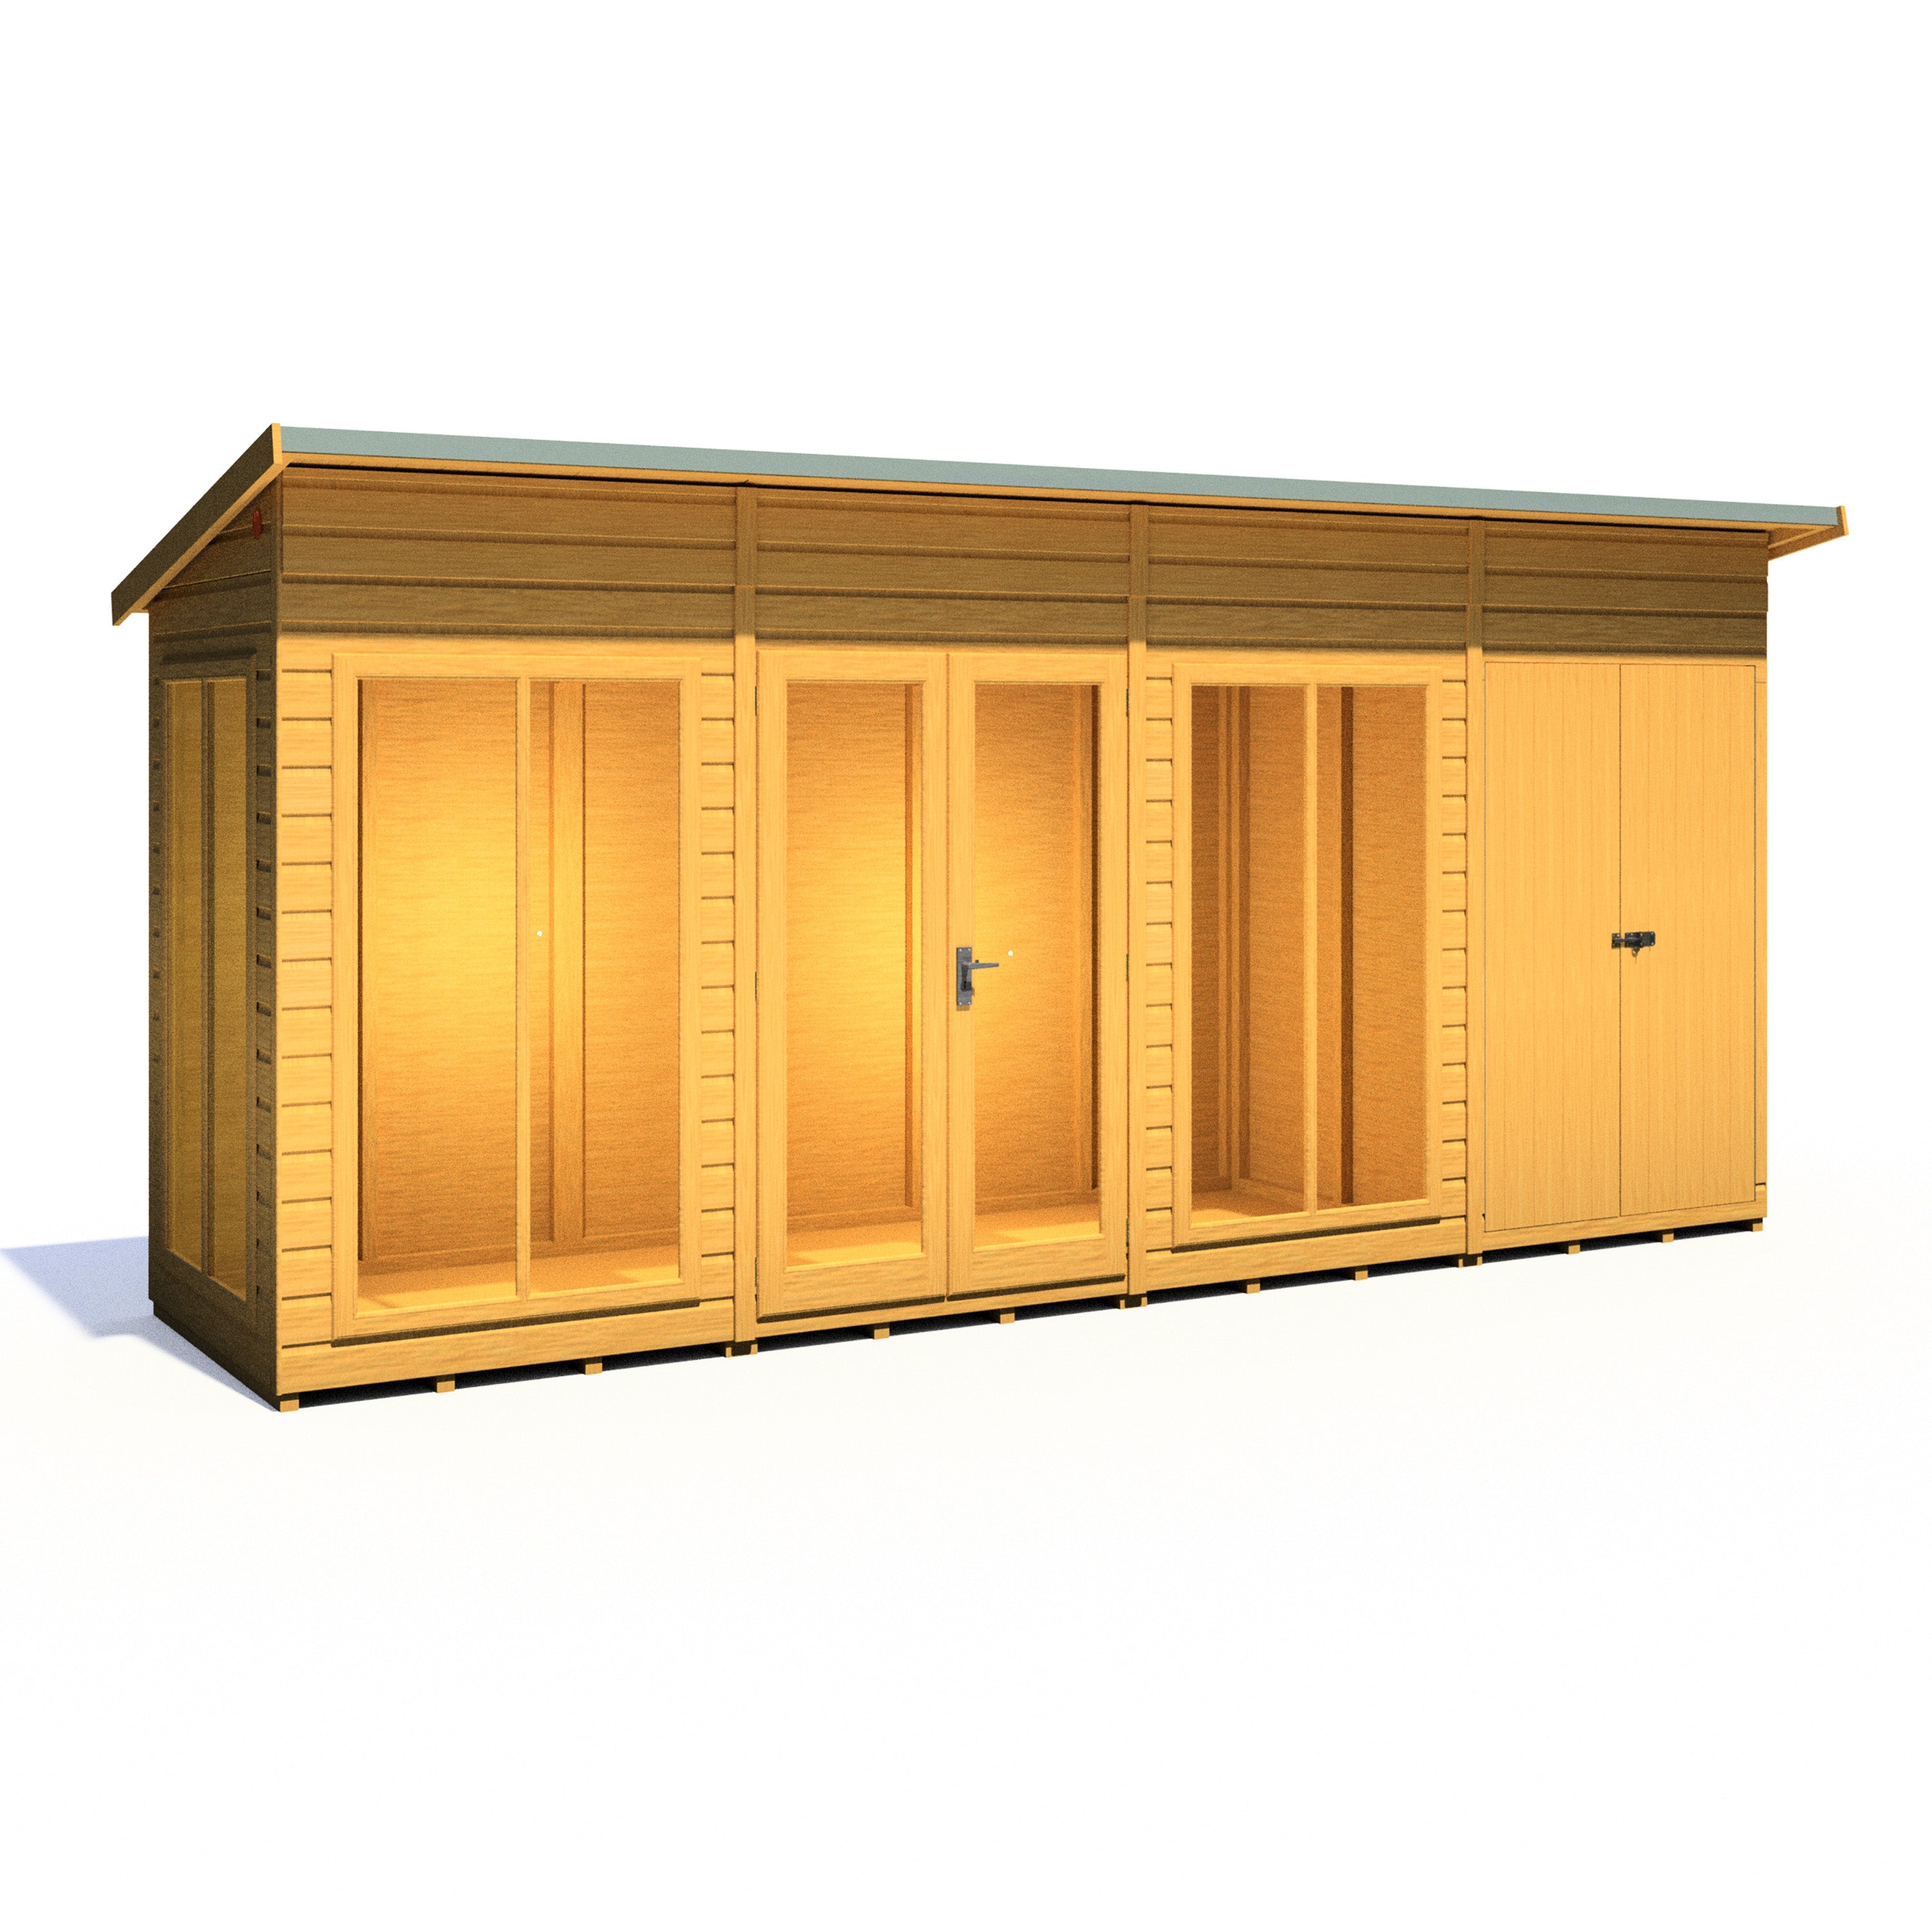 Shire Lela Summerhouse with Storage Shed 16x4